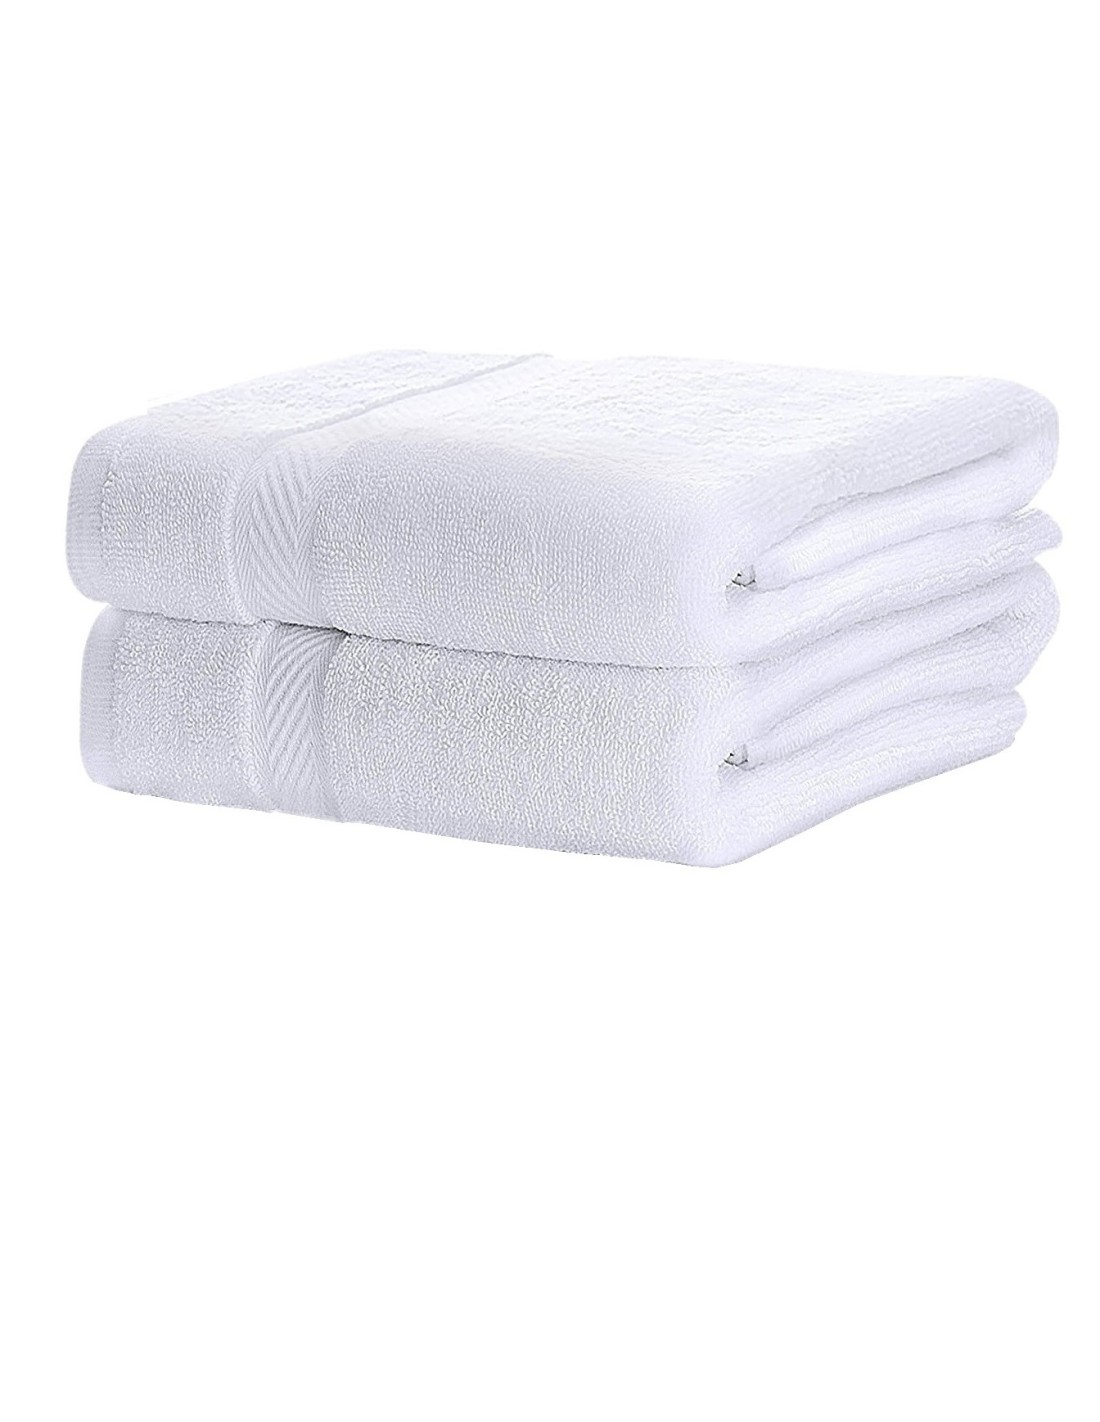 Asciugamani teli doccia grandi ❘ Westwing